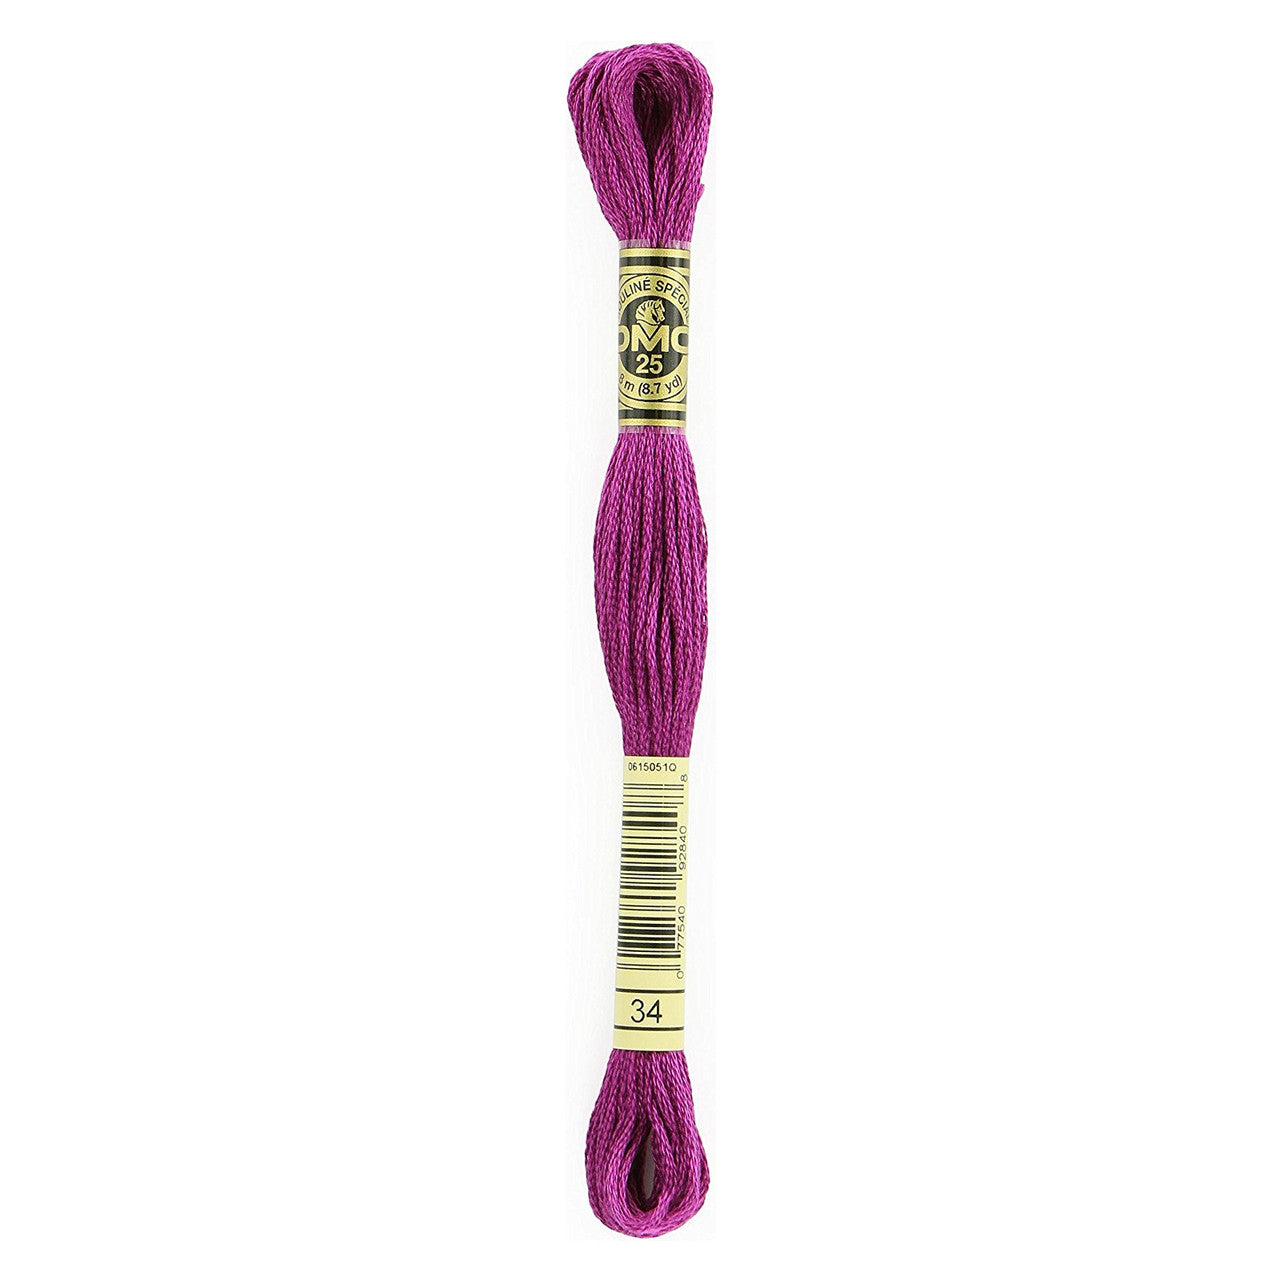 DMC 34 - Fuchsia - Dark - DMC 6 Strand Embroidery Thread, Thread & Floss, Thread & Floss, The Crafty Grimalkin - A Cross Stitch Store